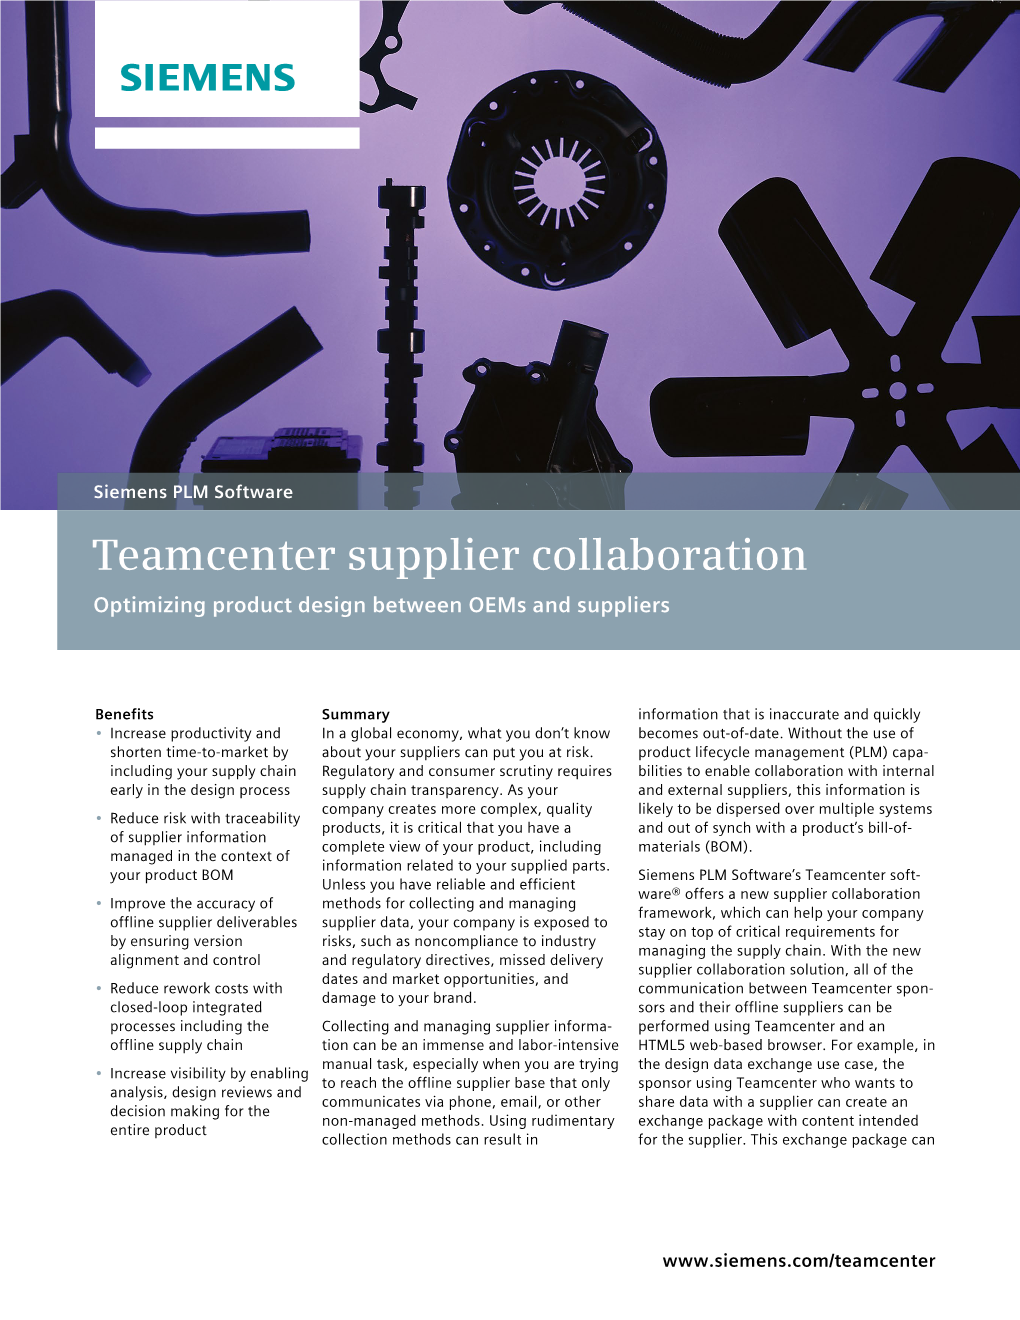 Teamcenter Supplier Collaboration Fact Sheet